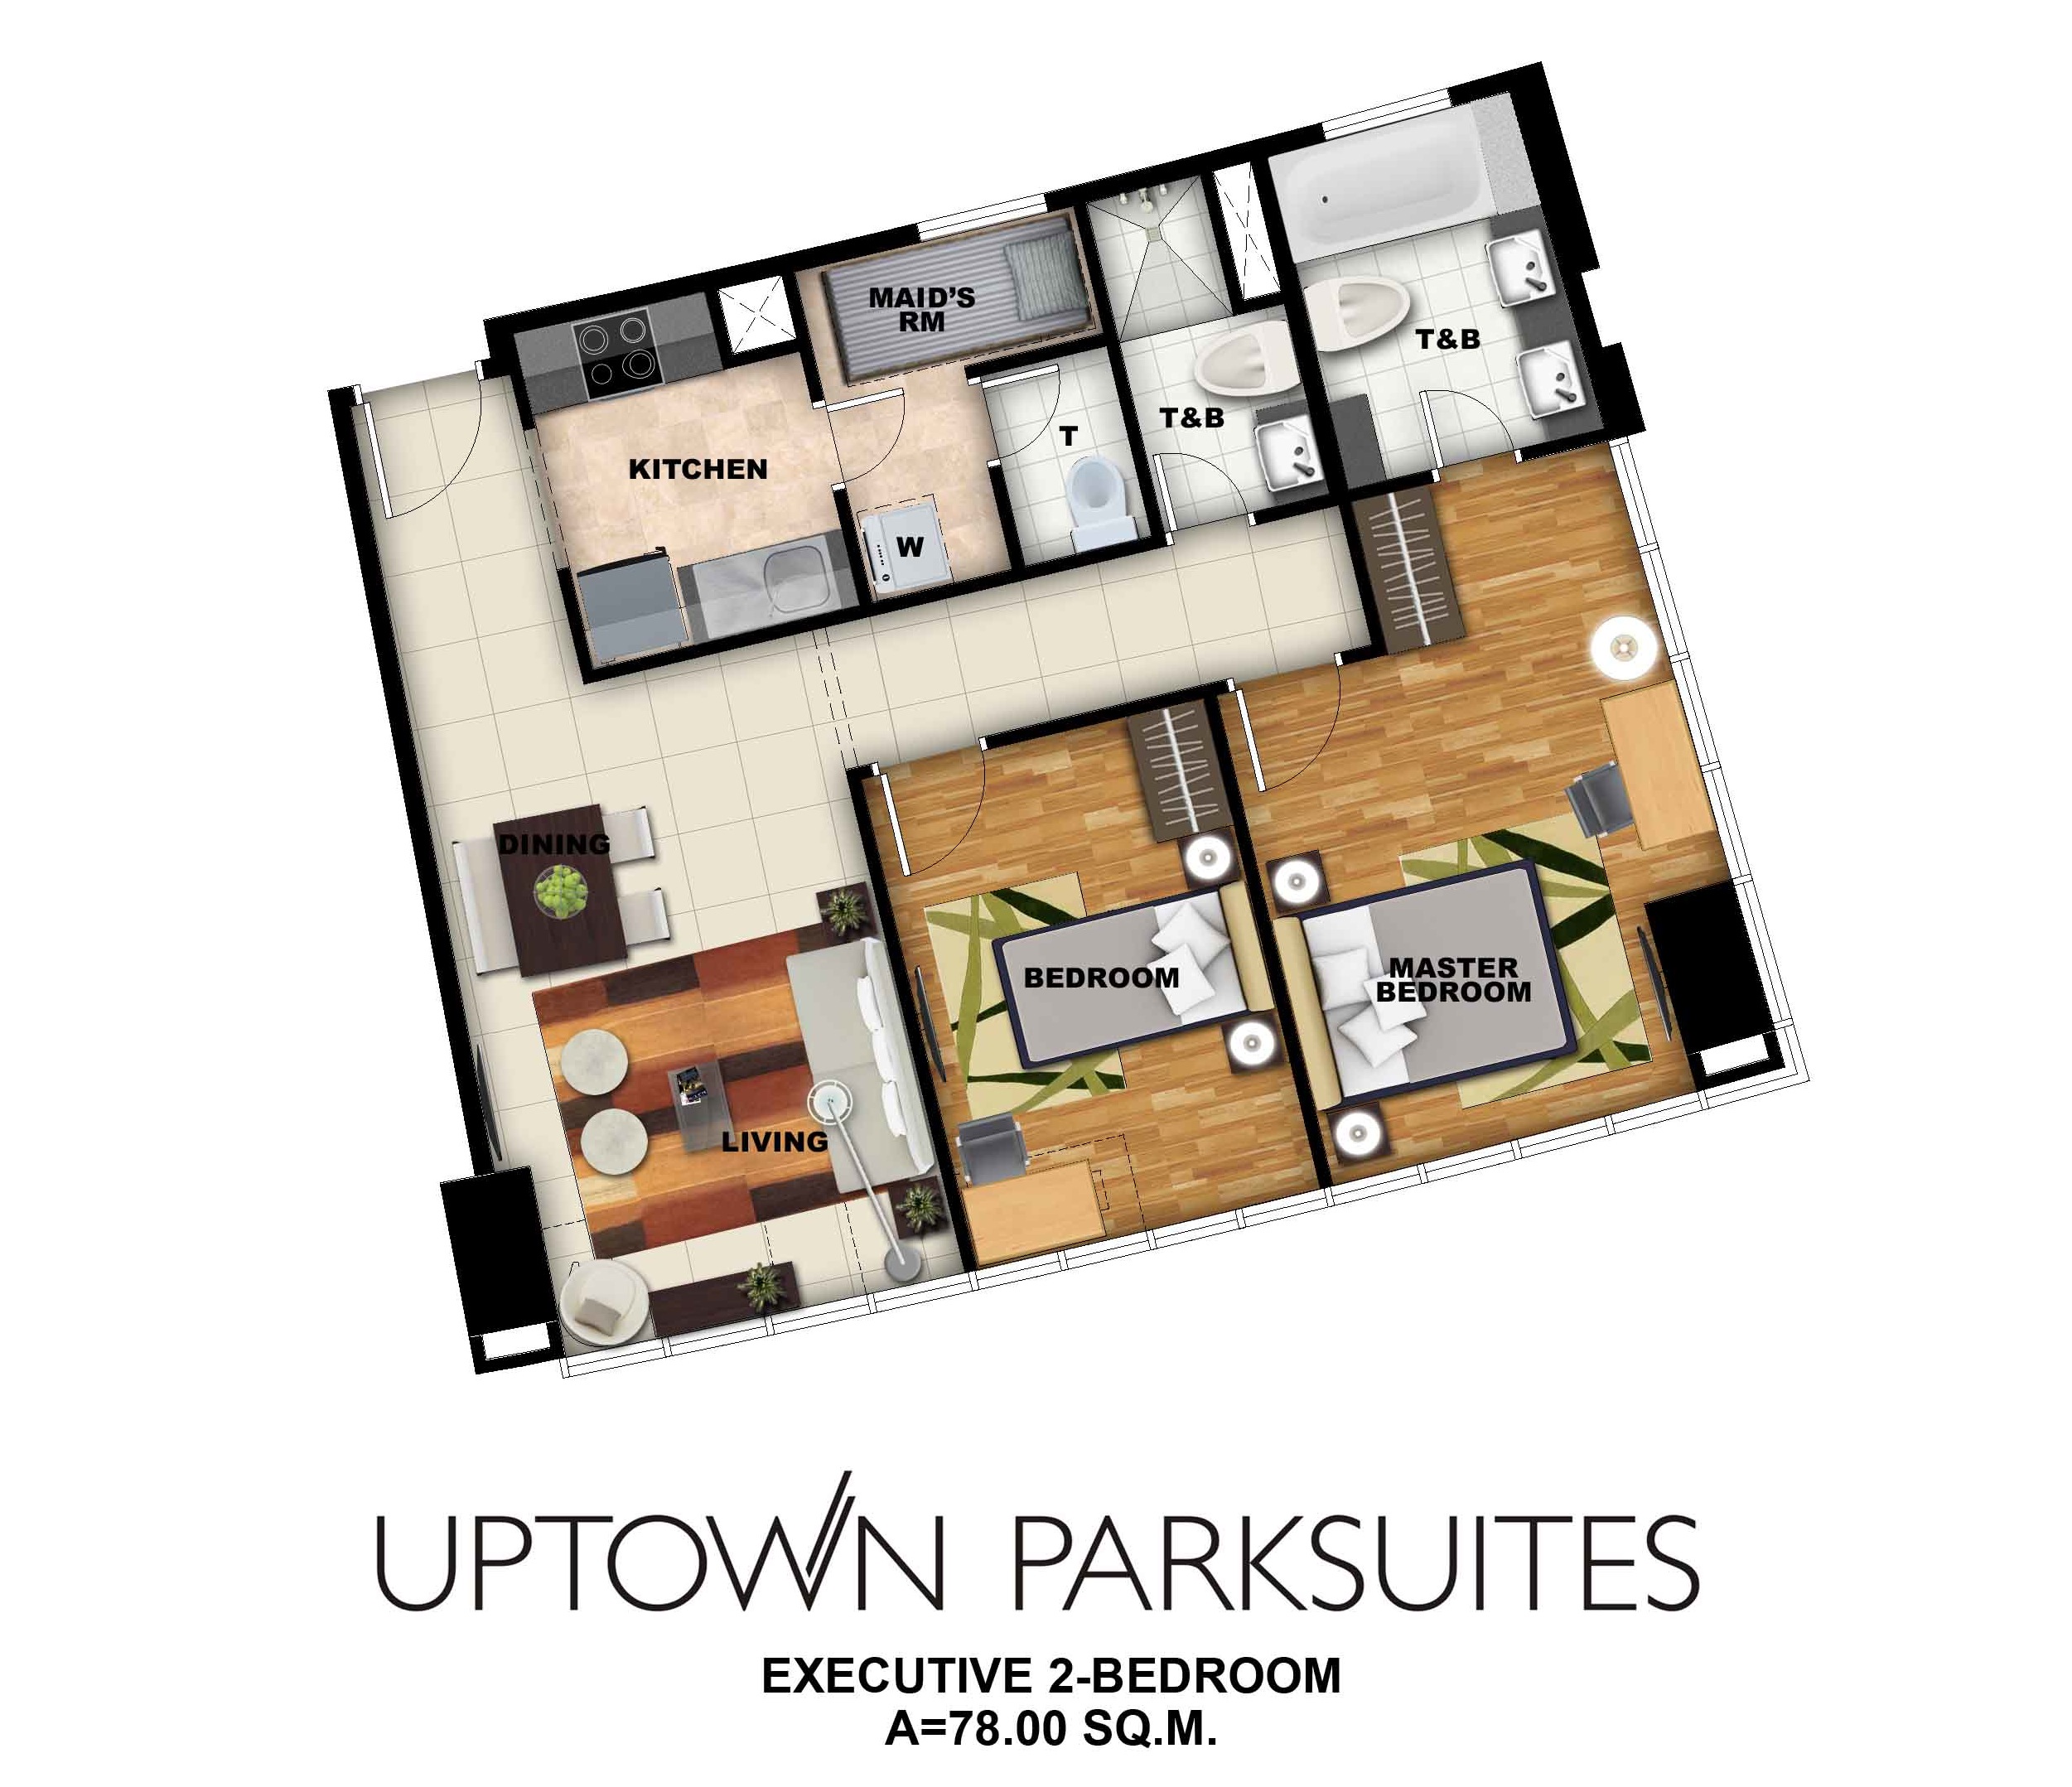 Uptown parksuites 2 bedroom executive